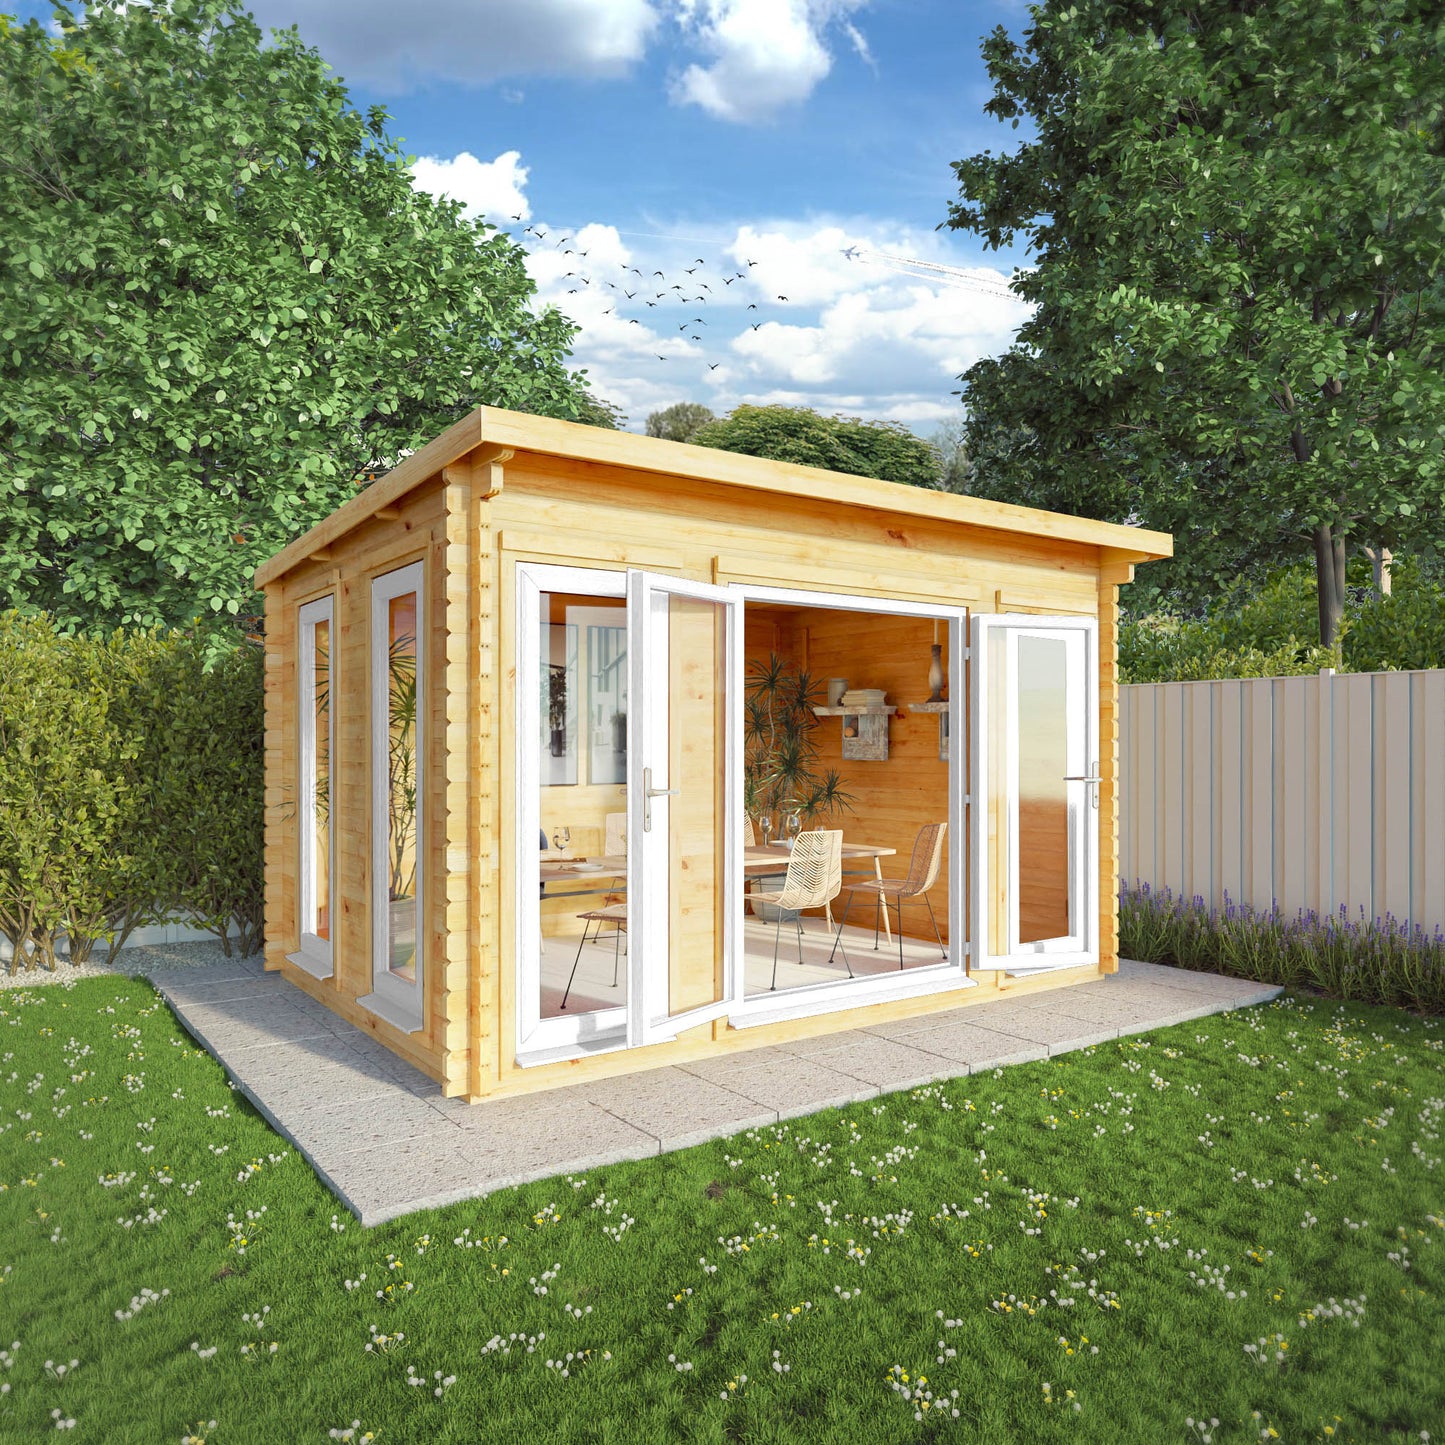 The 4m x 3m Wren Pent Log Cabin with White UPVC